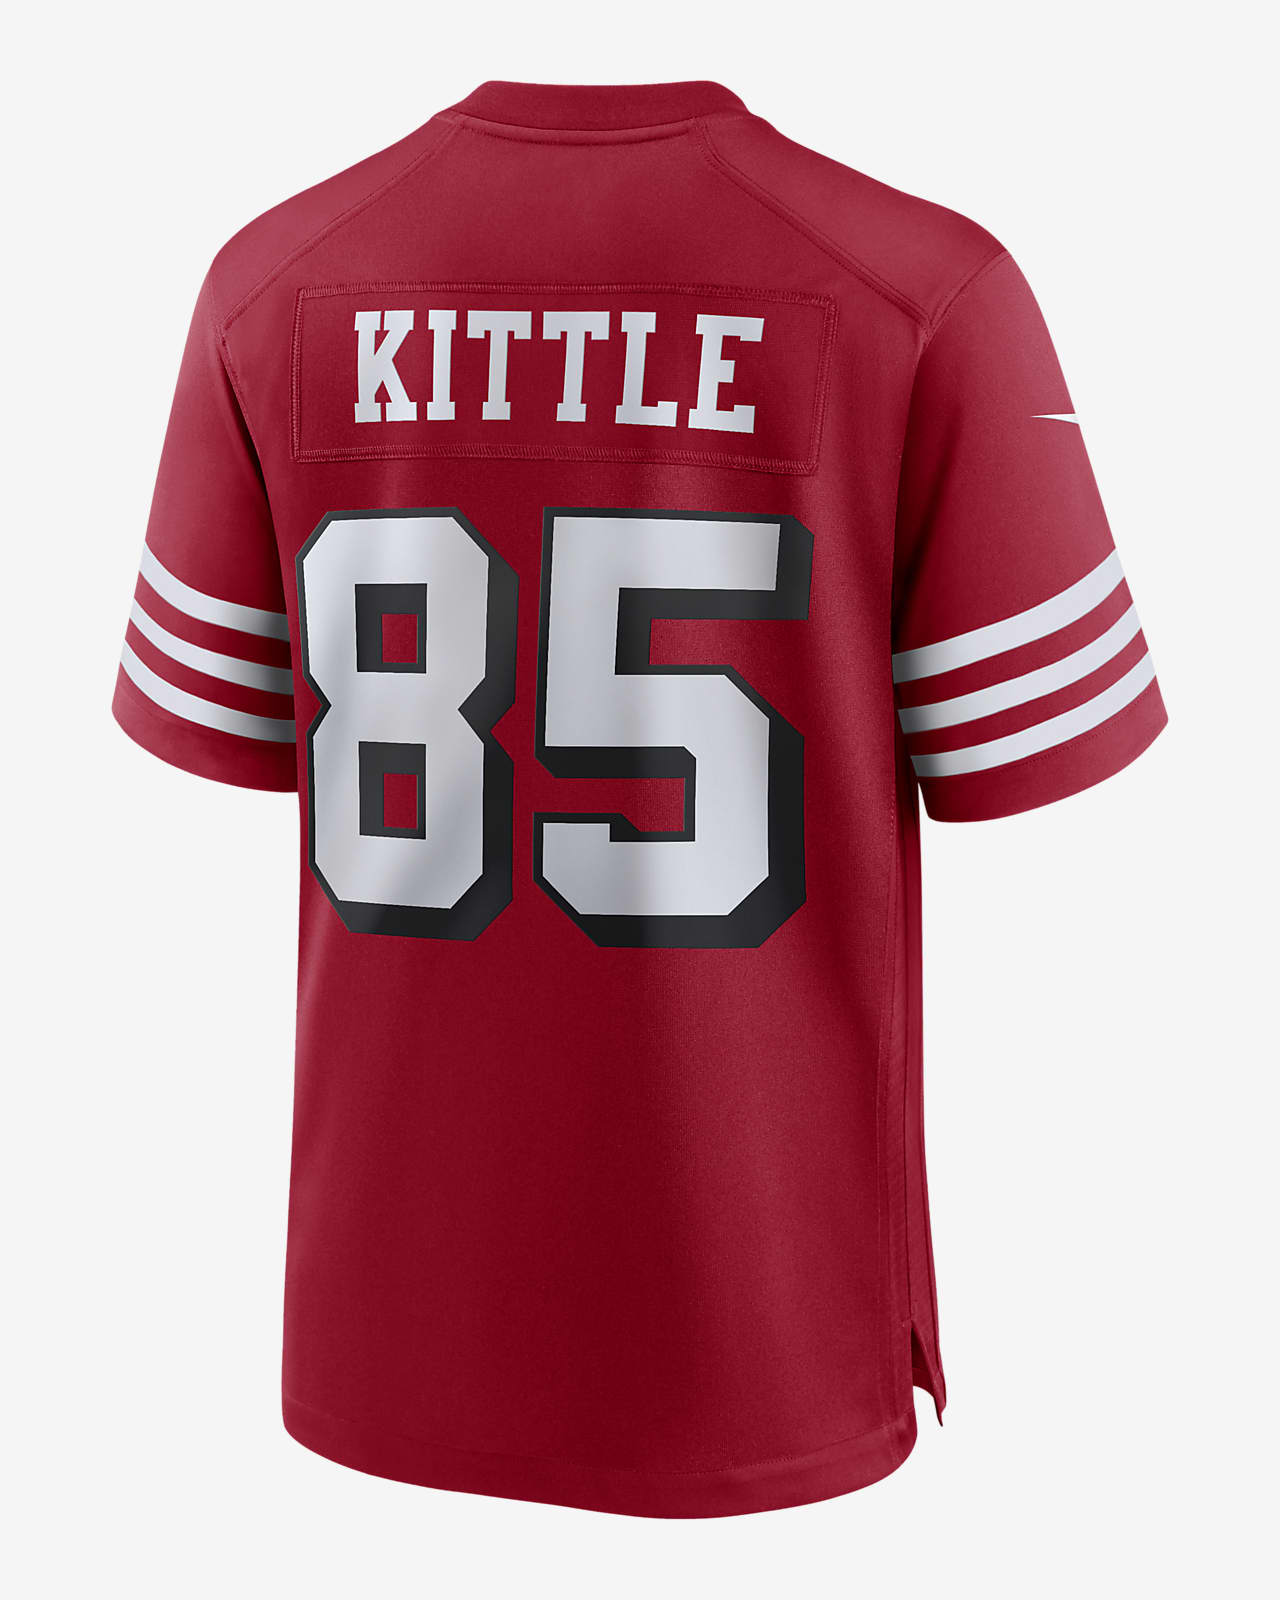 black 49ers kittle jersey